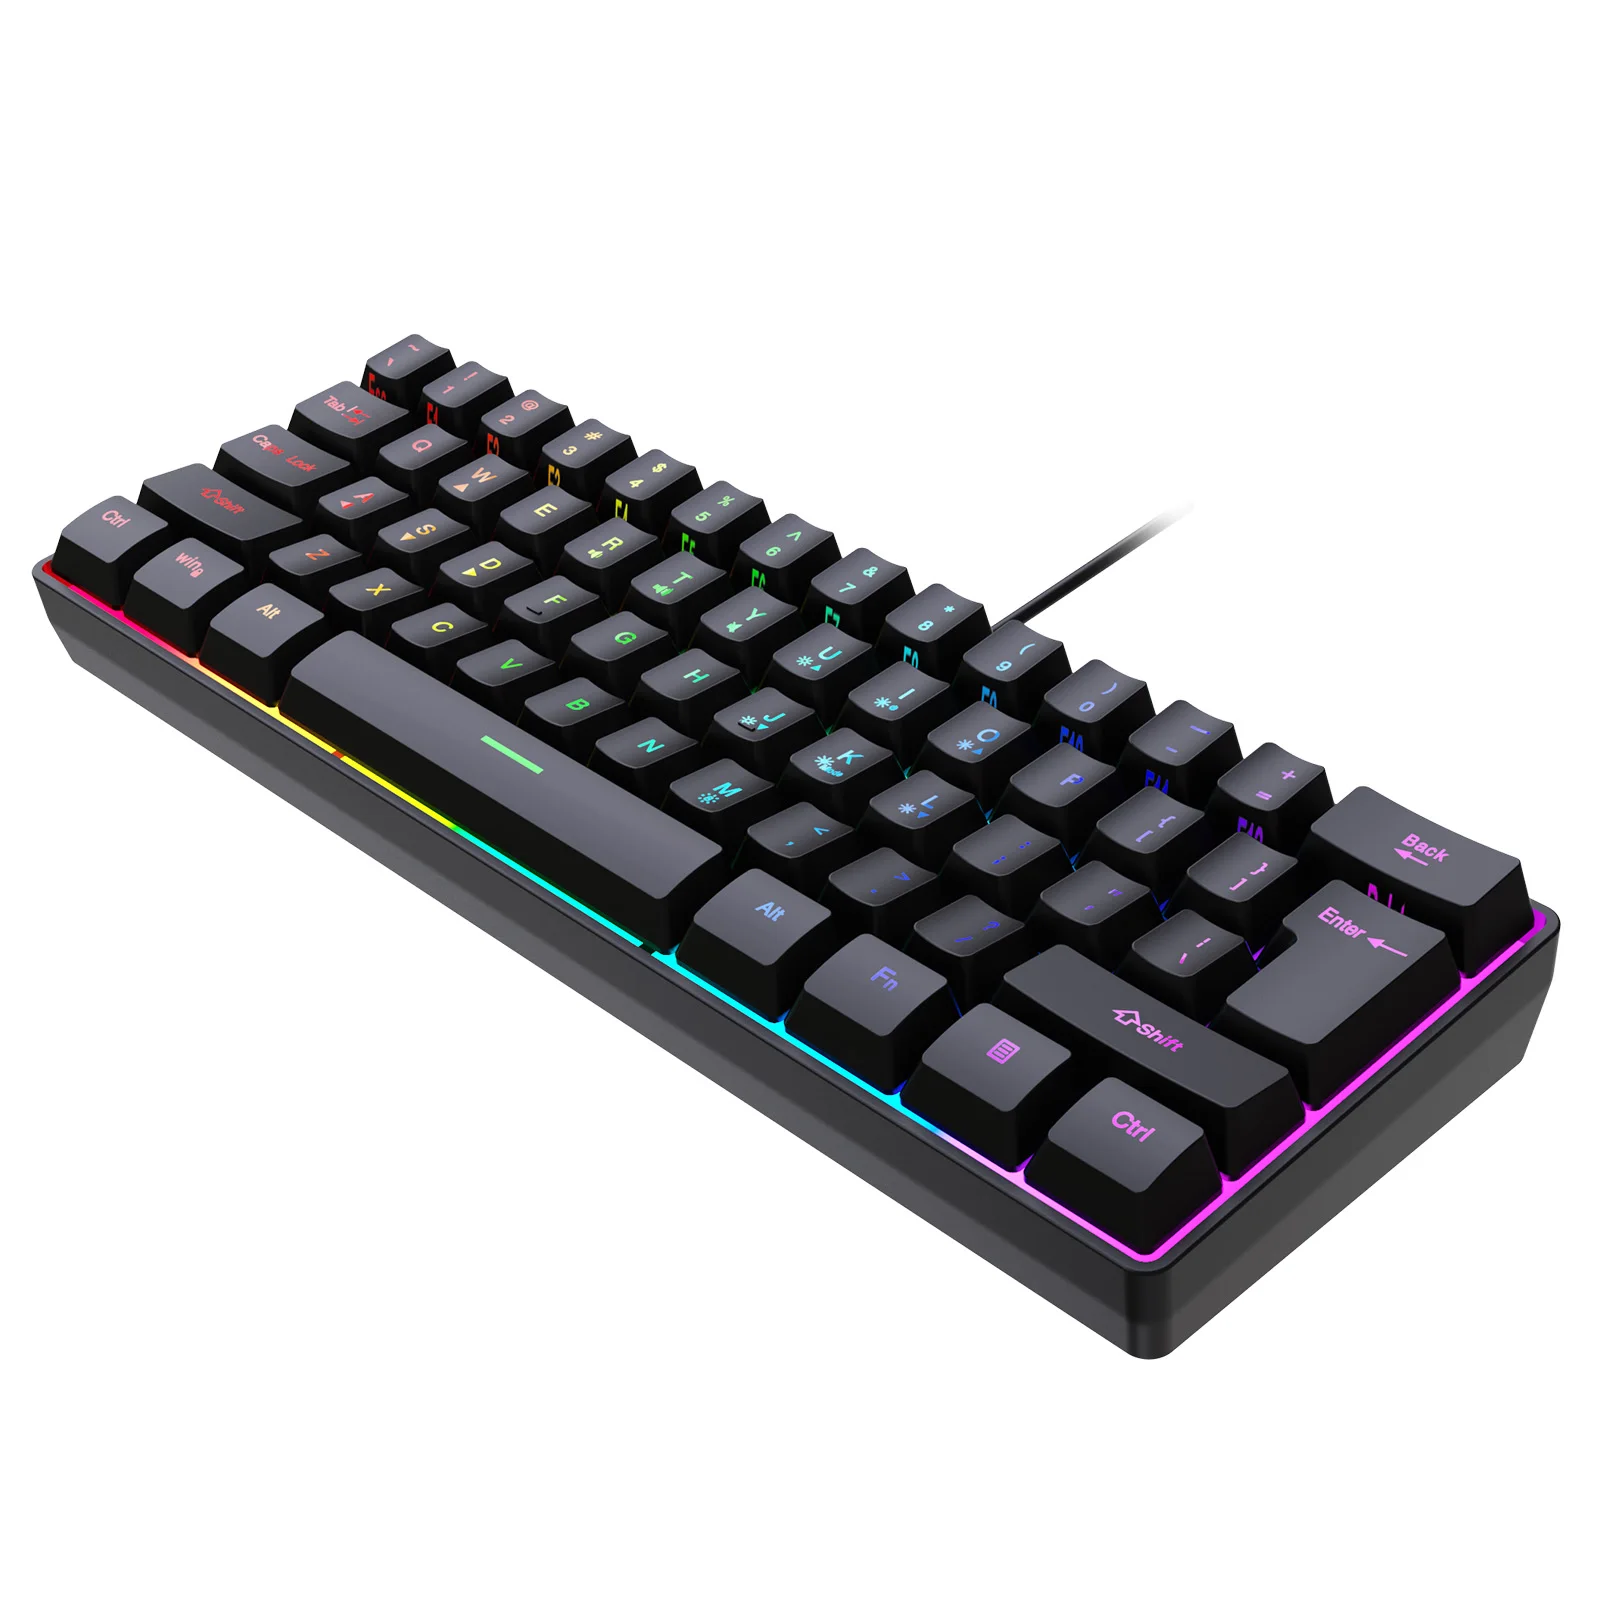 

61 Keys RGB Backlit 60% Wired Gaming Keyboard, Ergonomic Waterproof Mini Compact 60 Percent Mechanical Feeling Keyboard, for PC